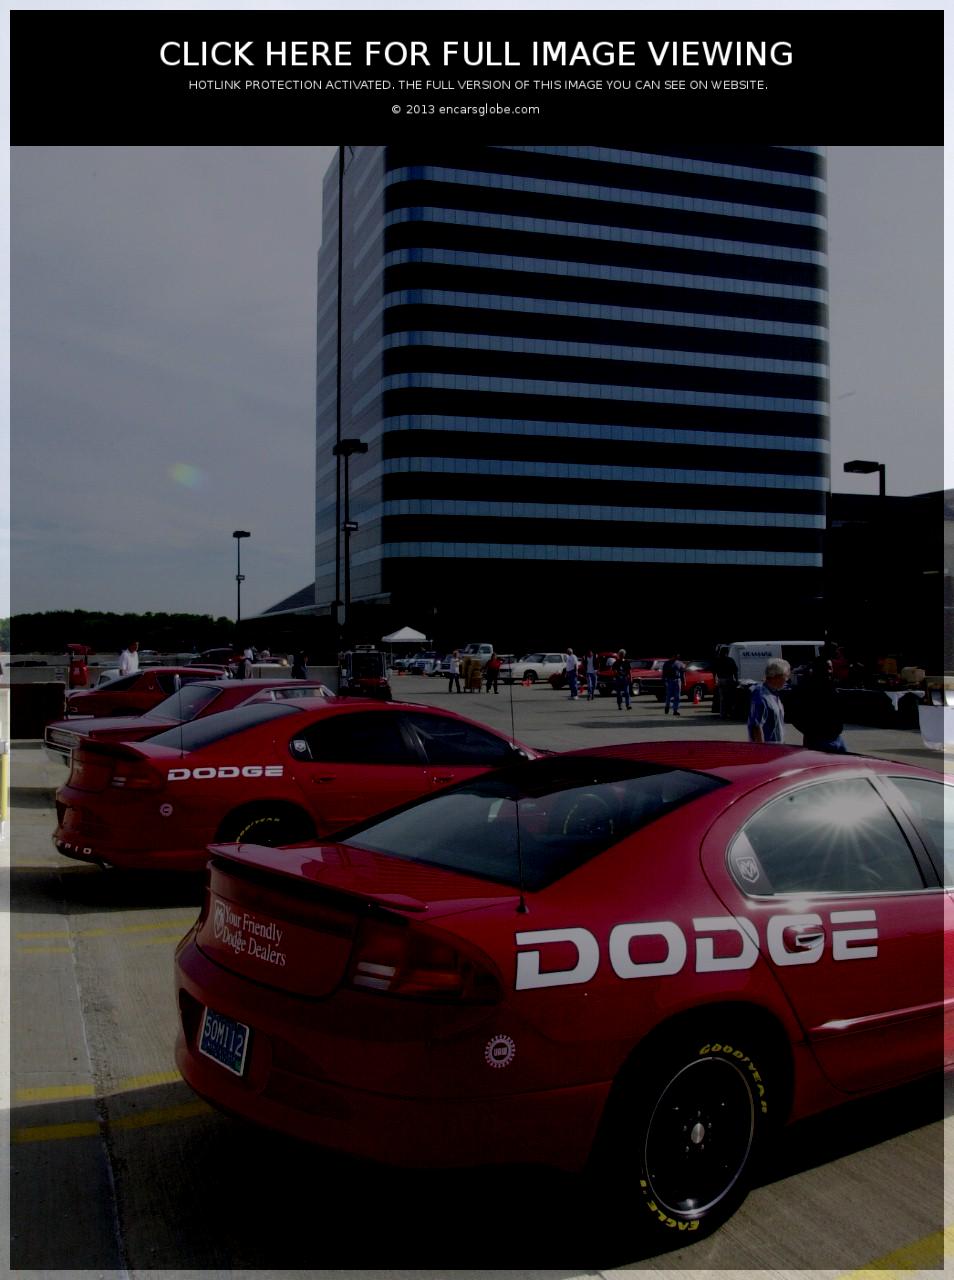 Dodge Intrepid NASCAR: 01 photo · Dodge Intrepid NASCAR: 02 photo